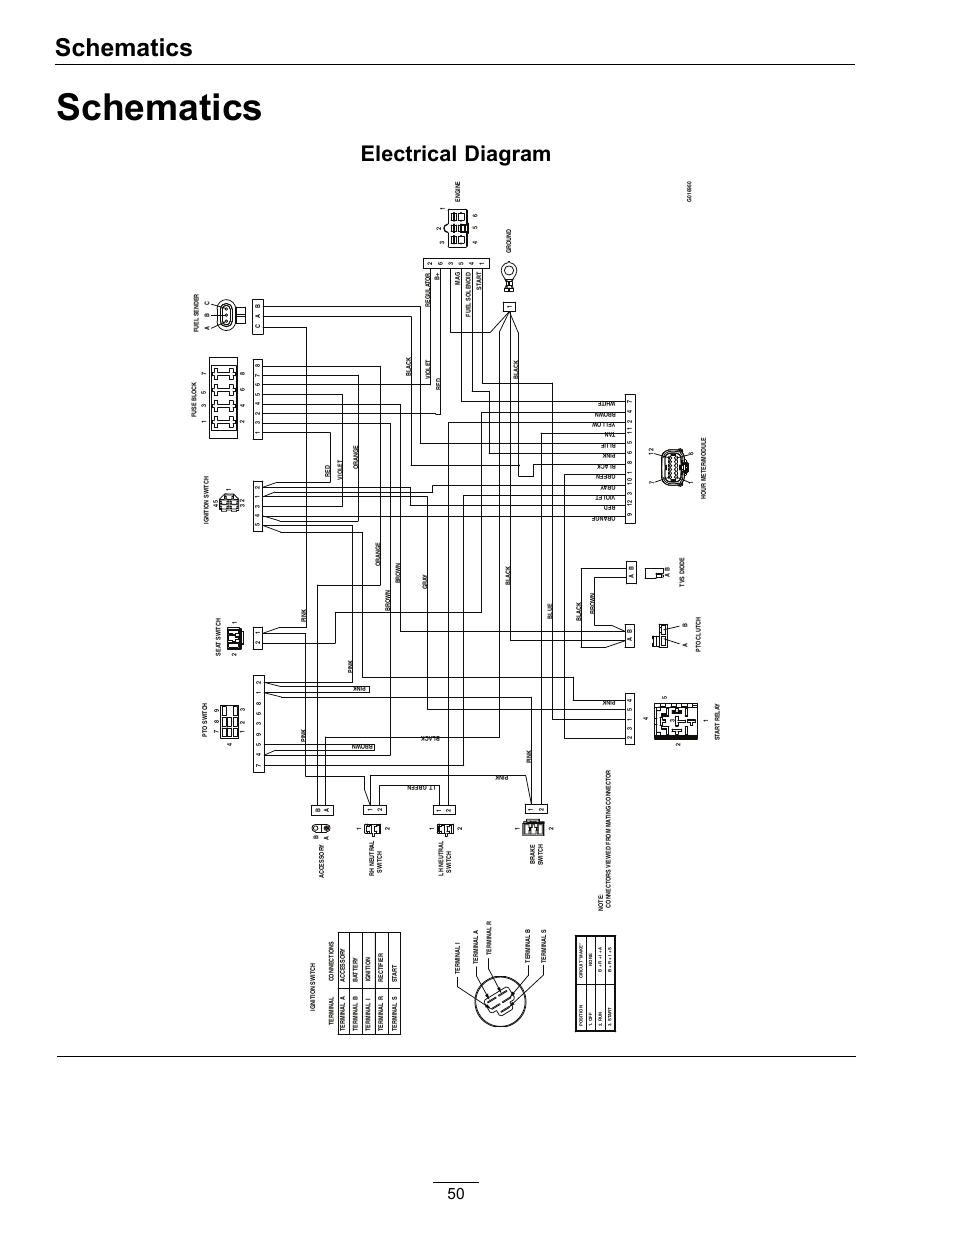 nursecall lights wiring diagram